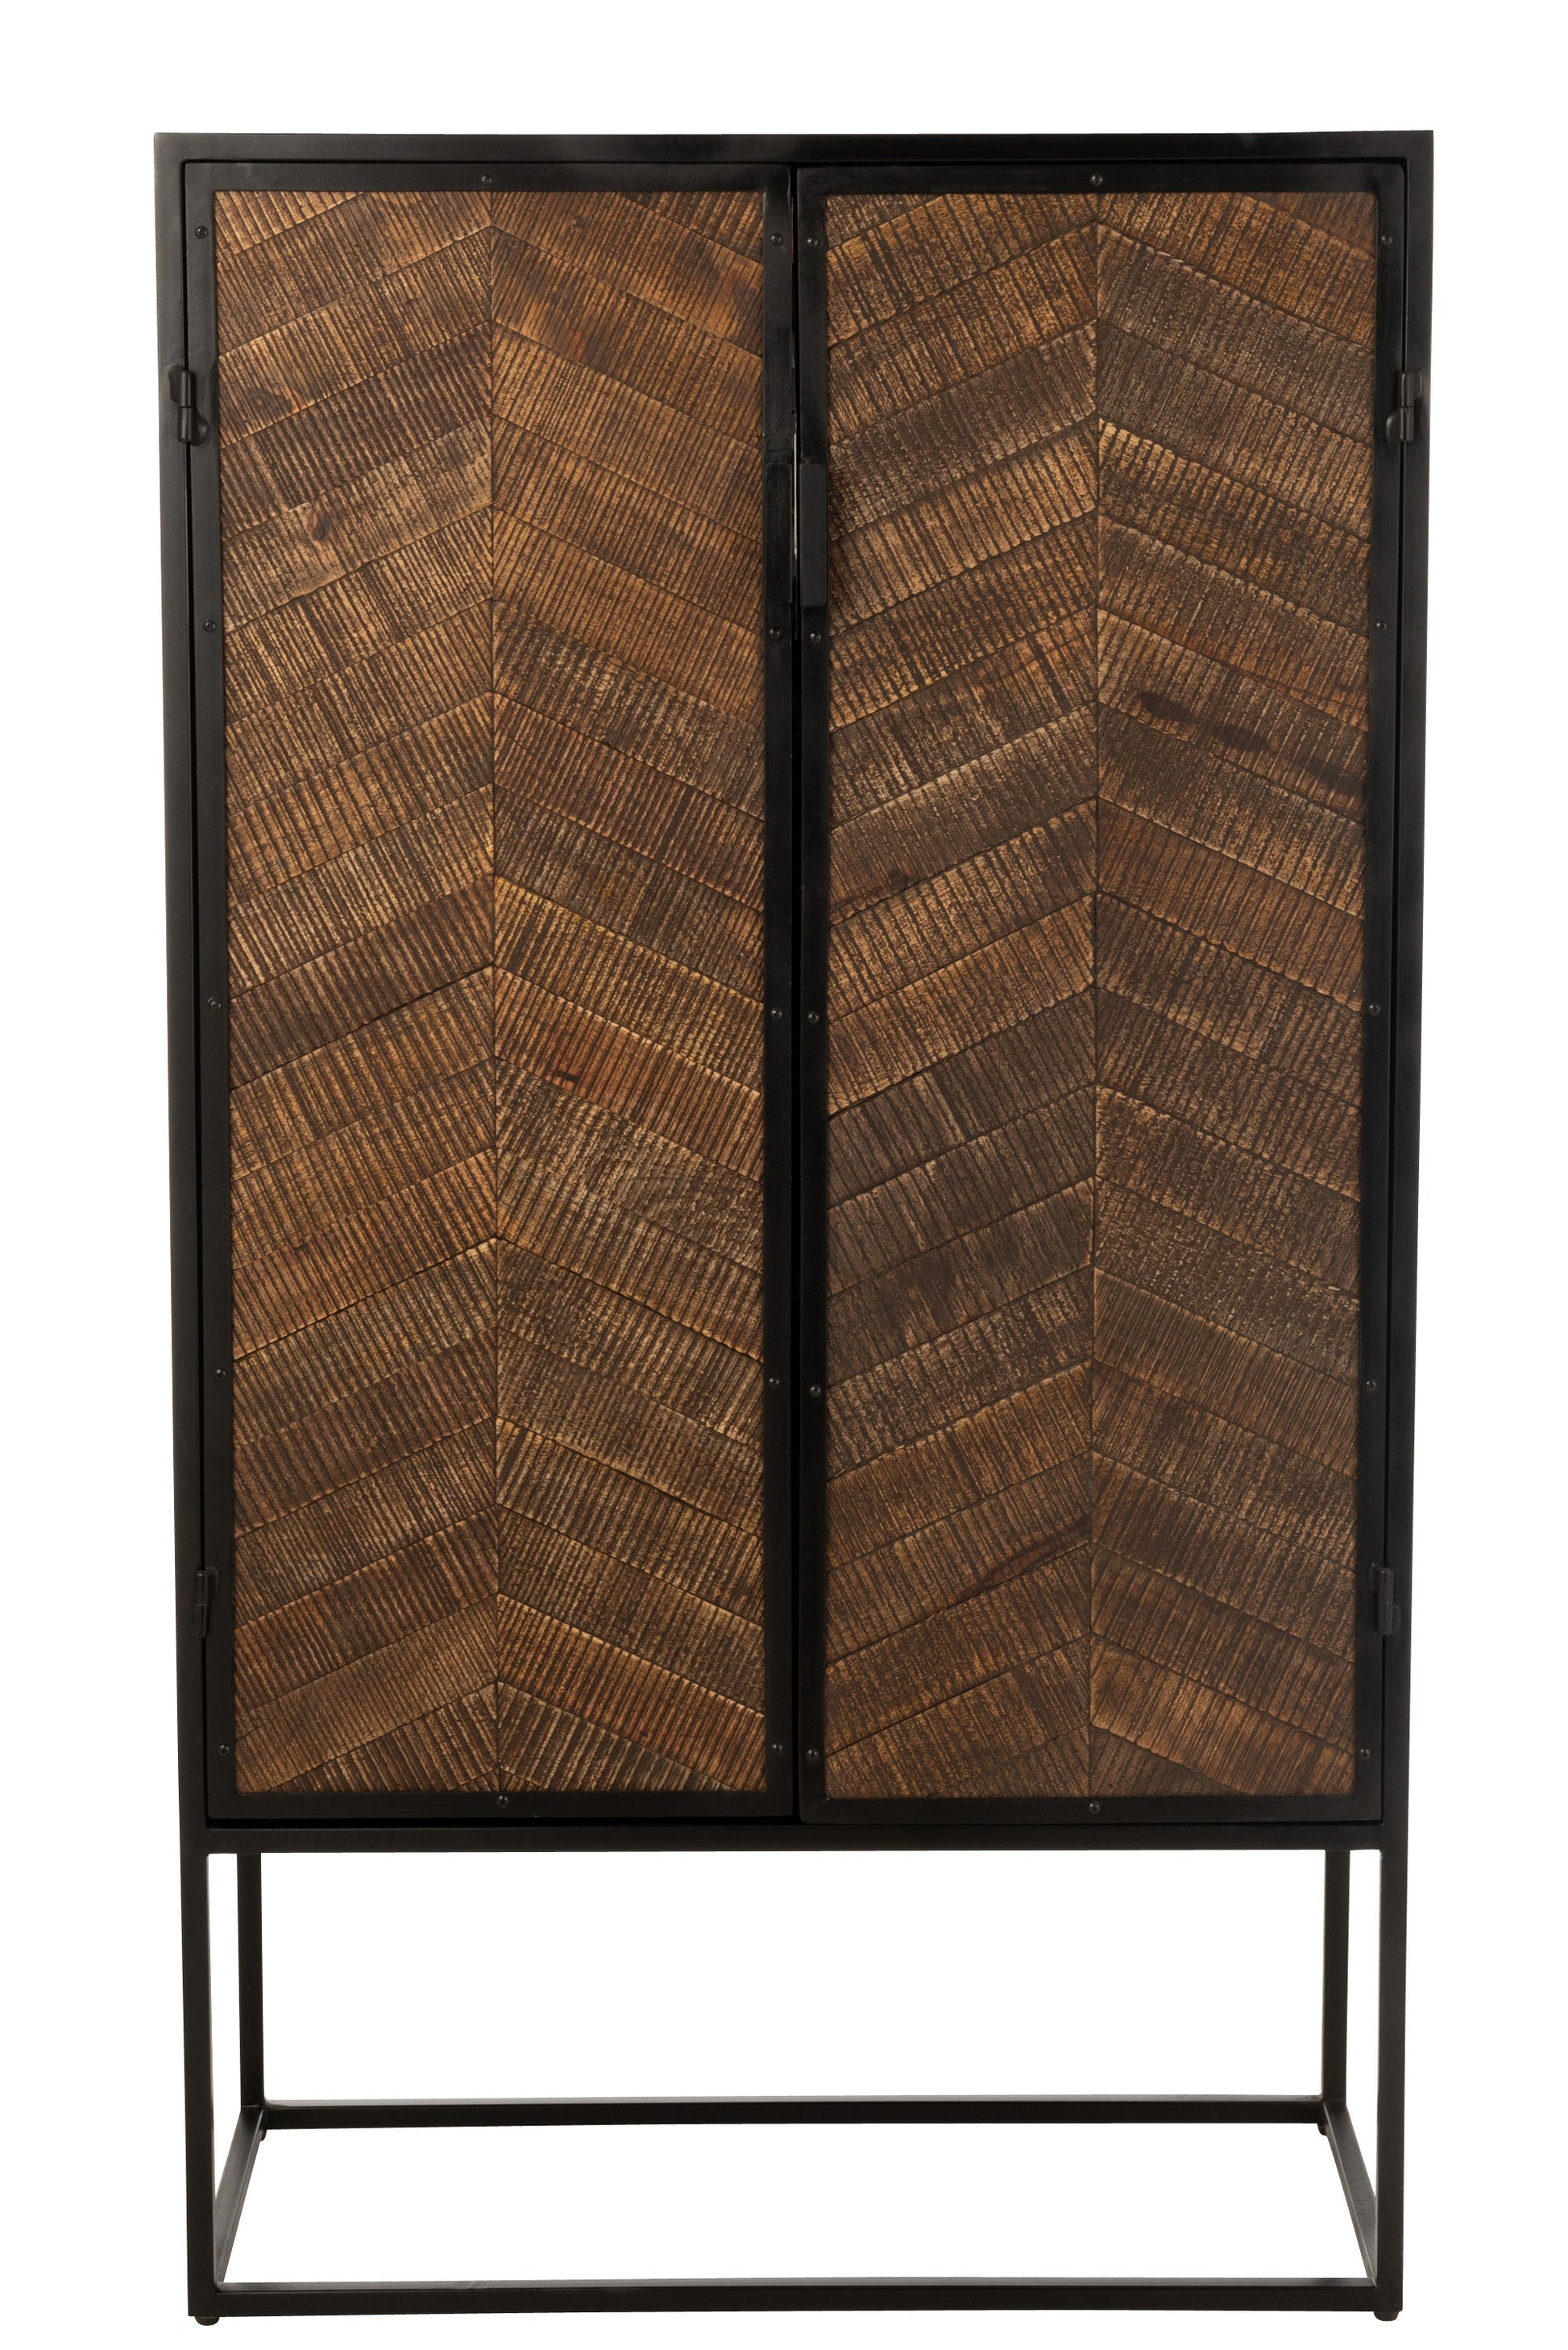 Brown Wood Cabinet